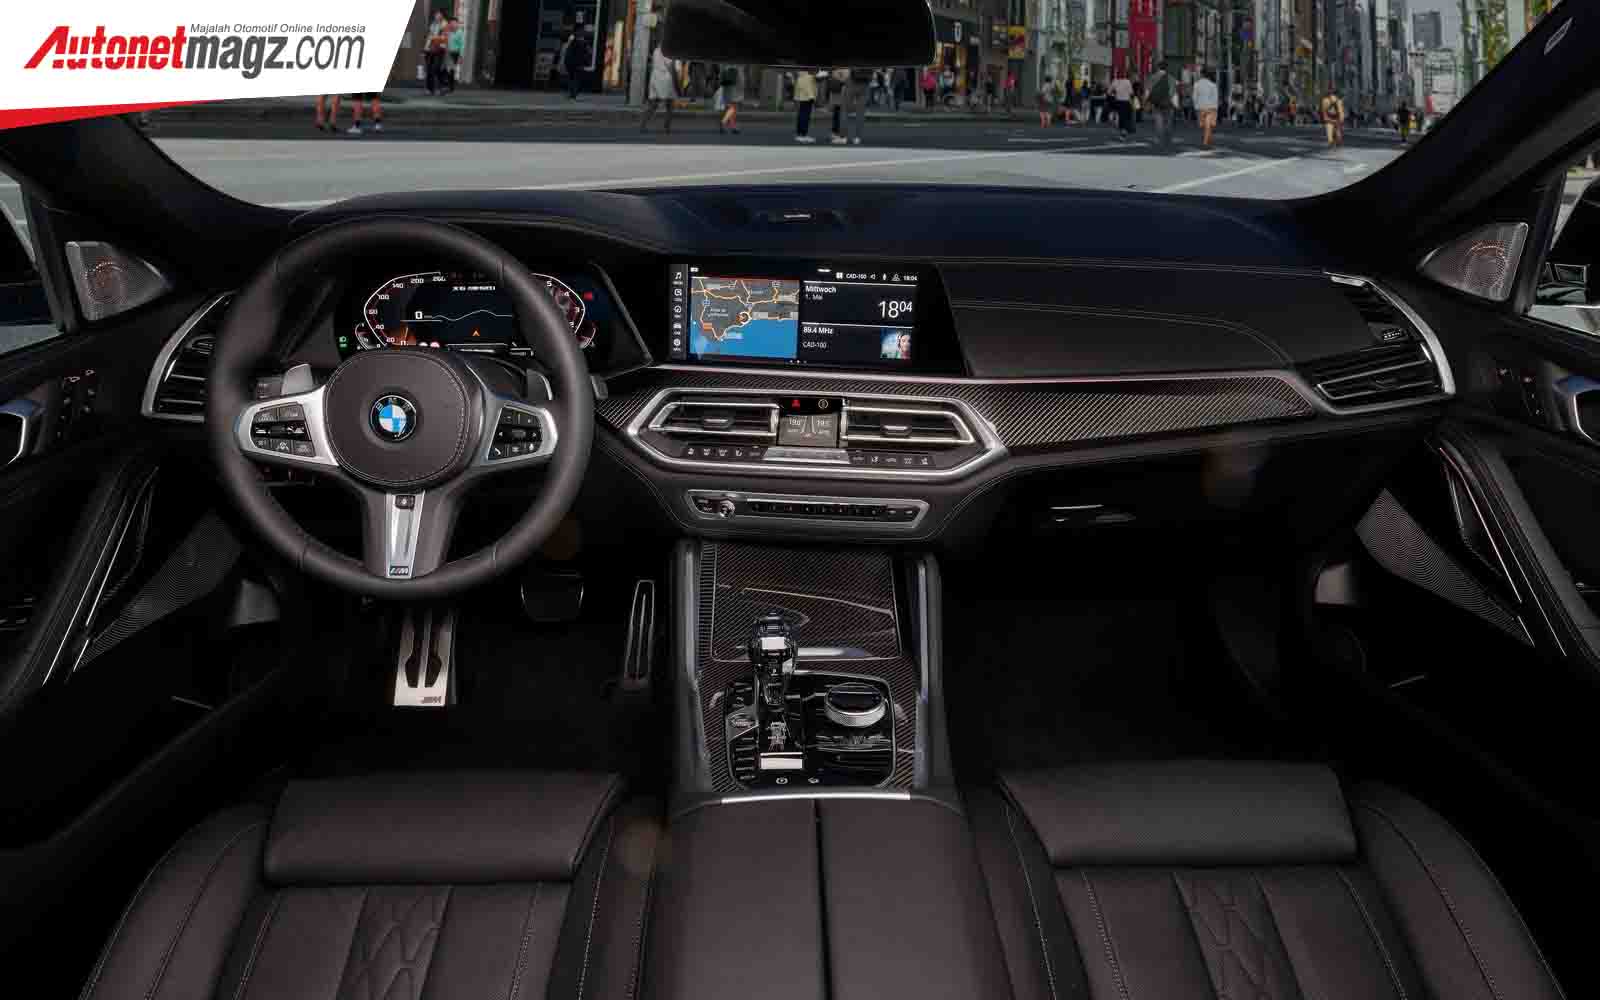 Berita, Interior New BMW X6 G06: New BMW X6 G06 Resmi Diperkenalkan, Bak 8-Series Versi Coupe SUV!